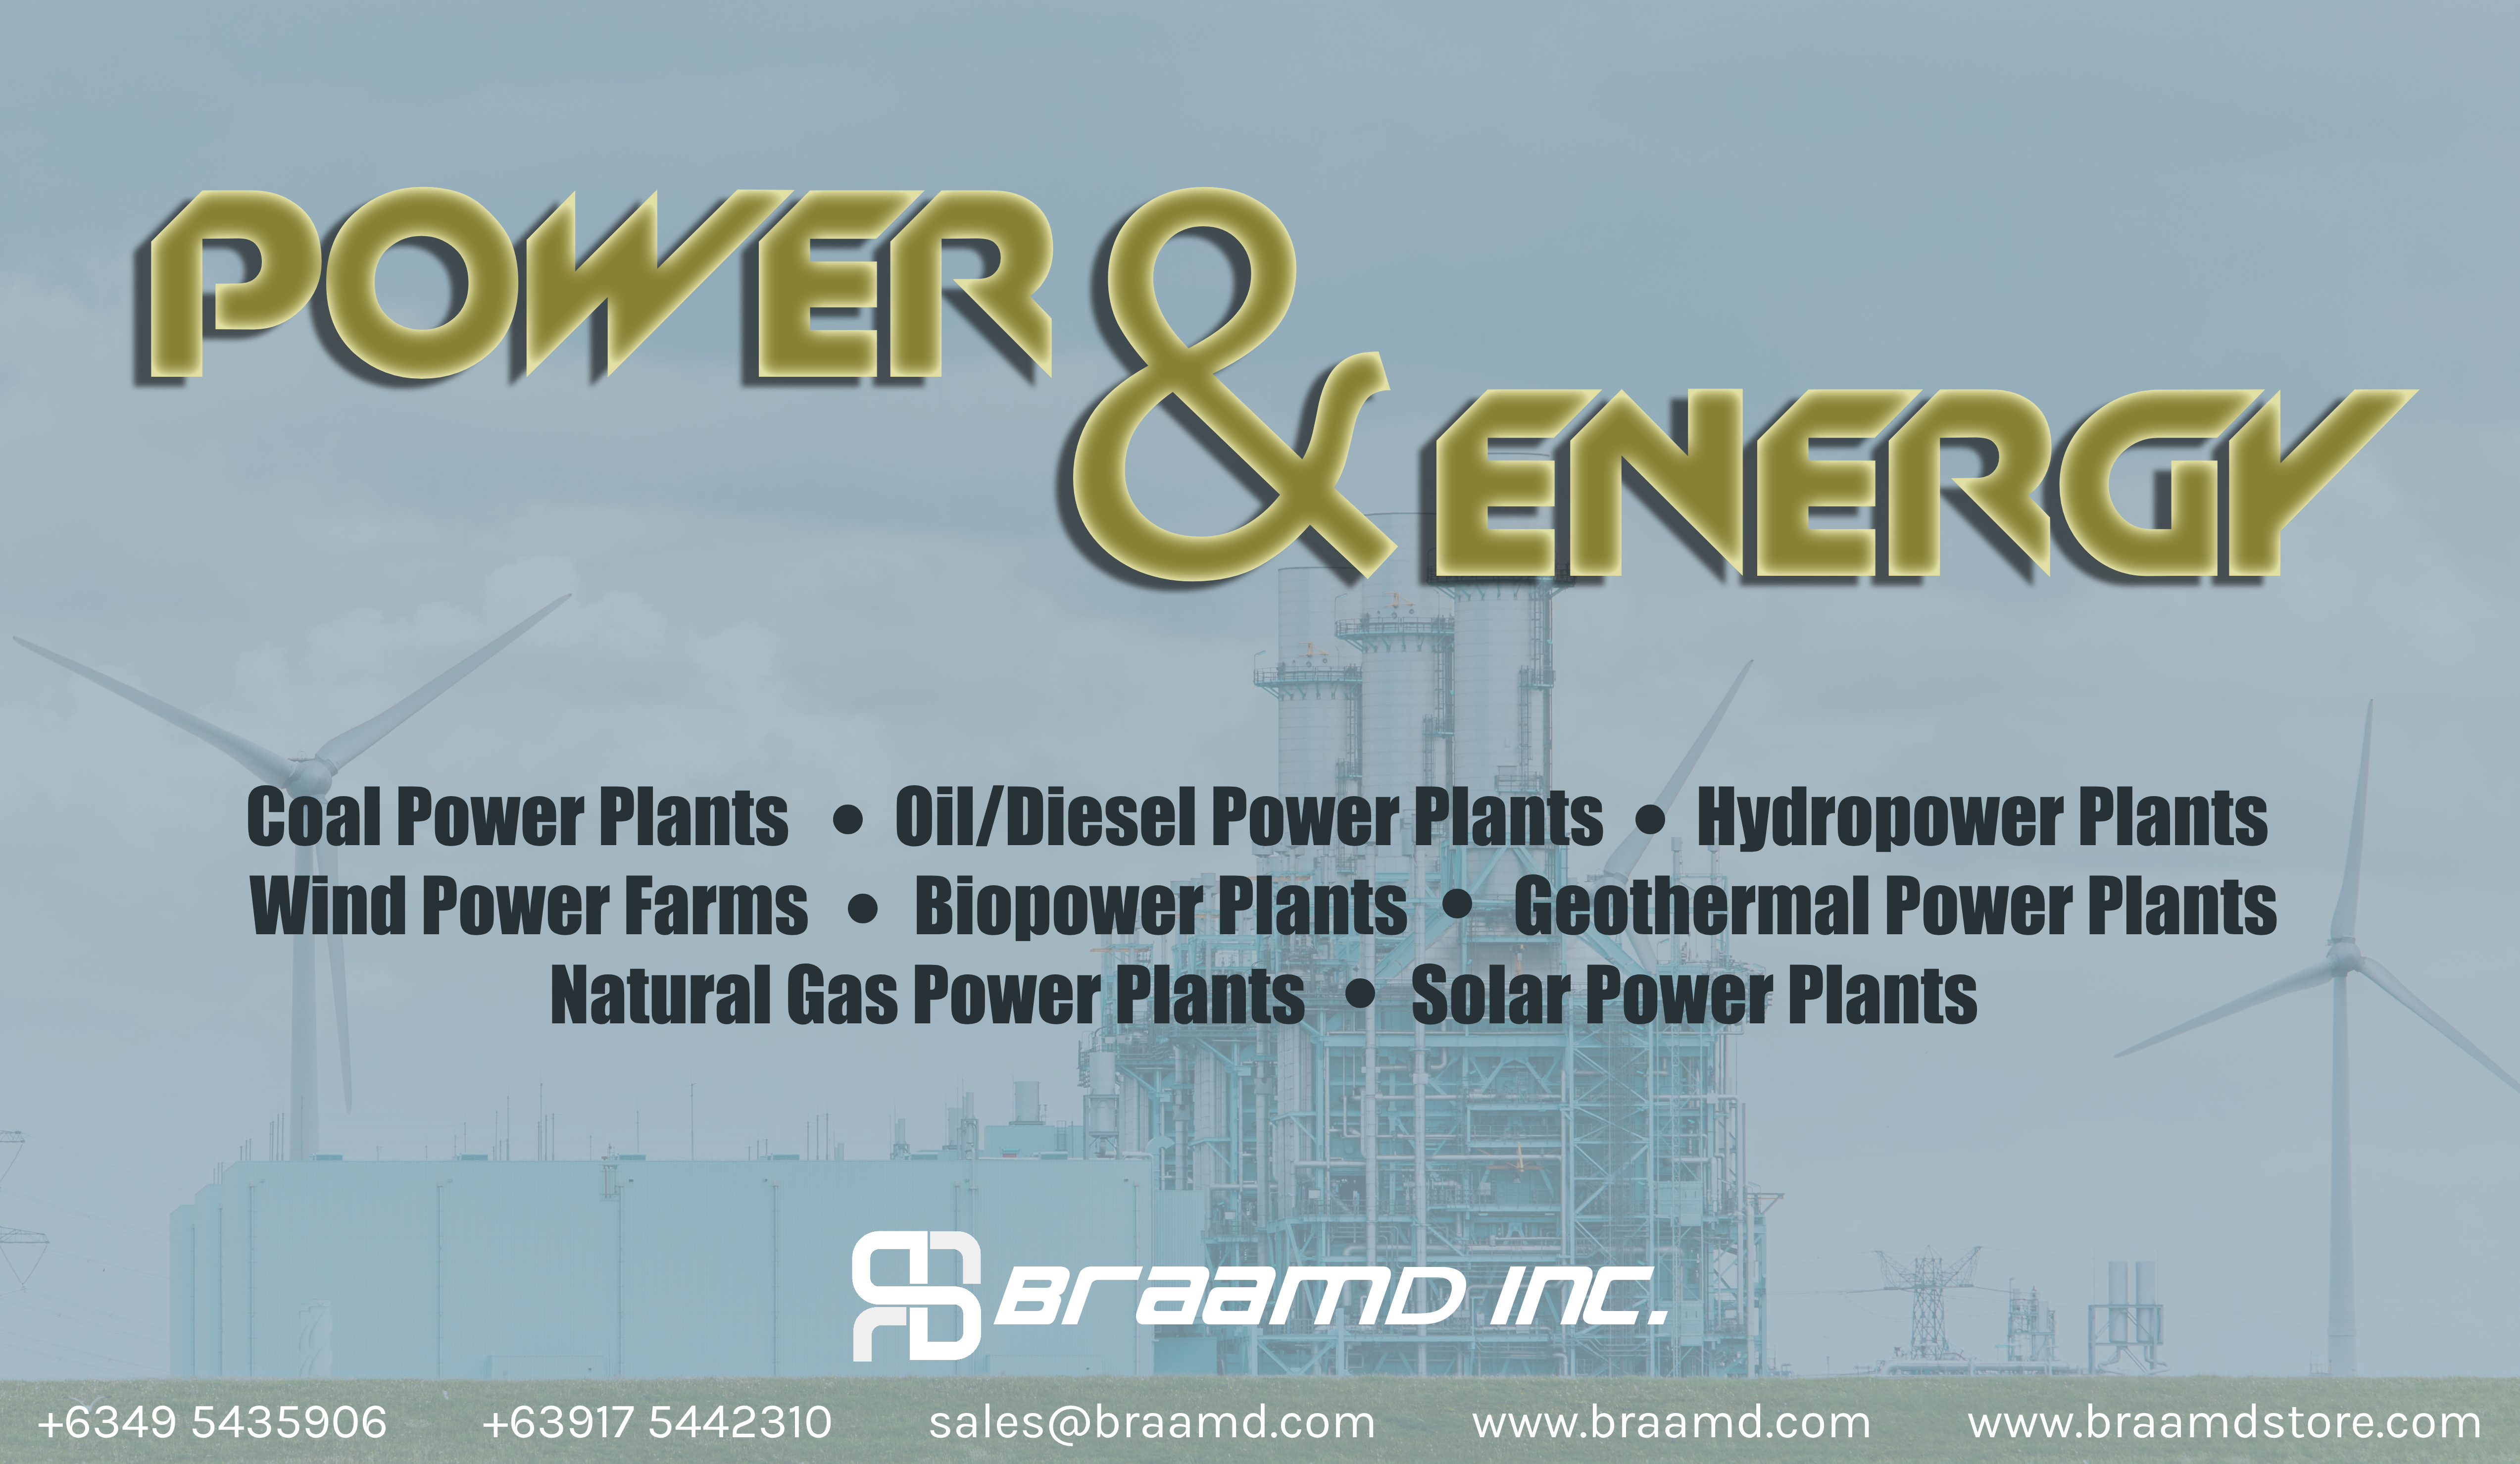 BRAAMD in Power & Energy